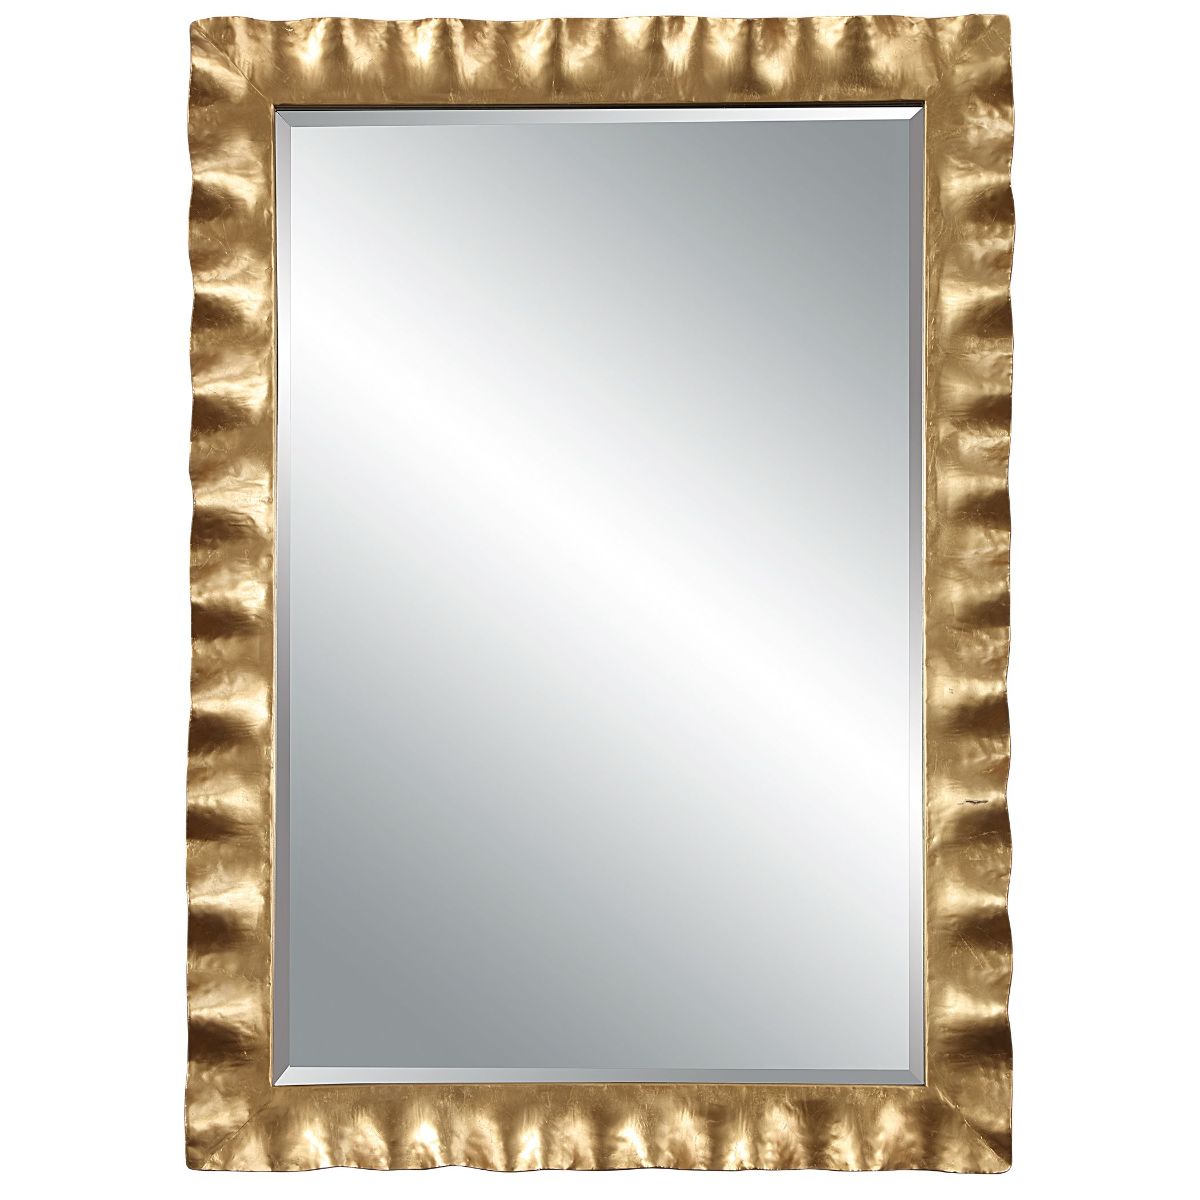 Uttermost Haya Scalloped Gold Mirror